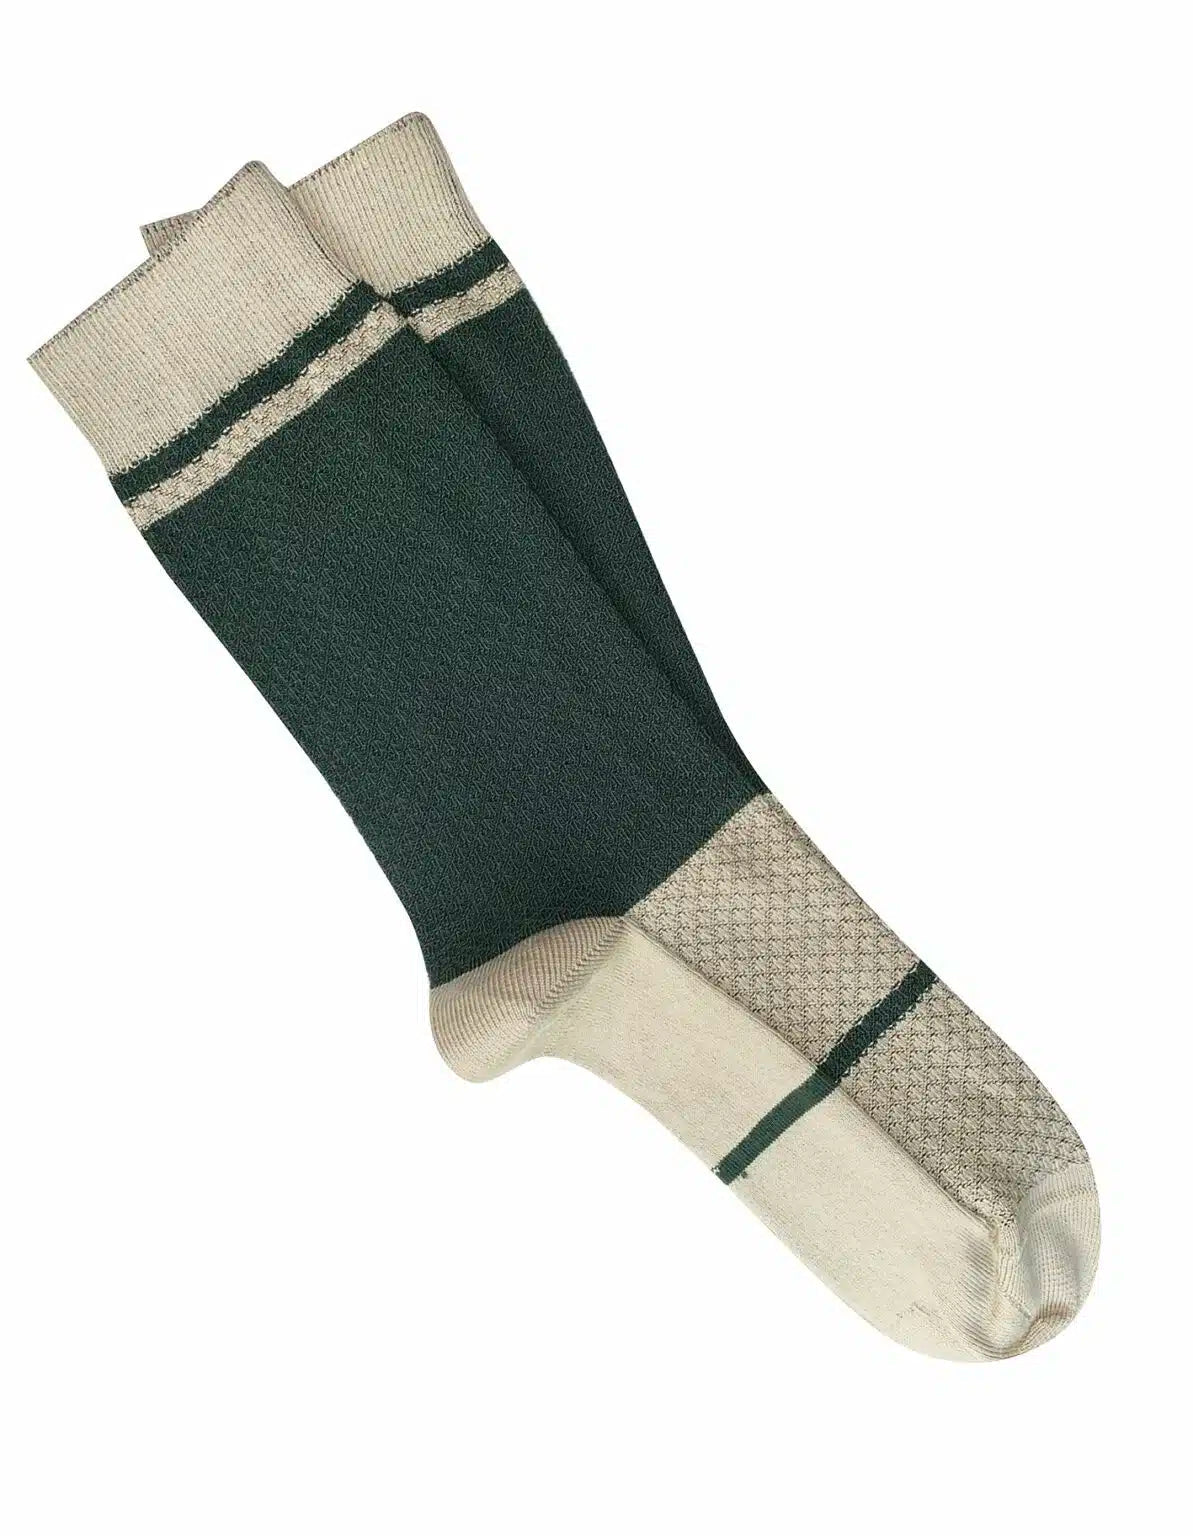 ‘Waffle’ Cotton Socks - Tightology socks Tightology Green/Chino 